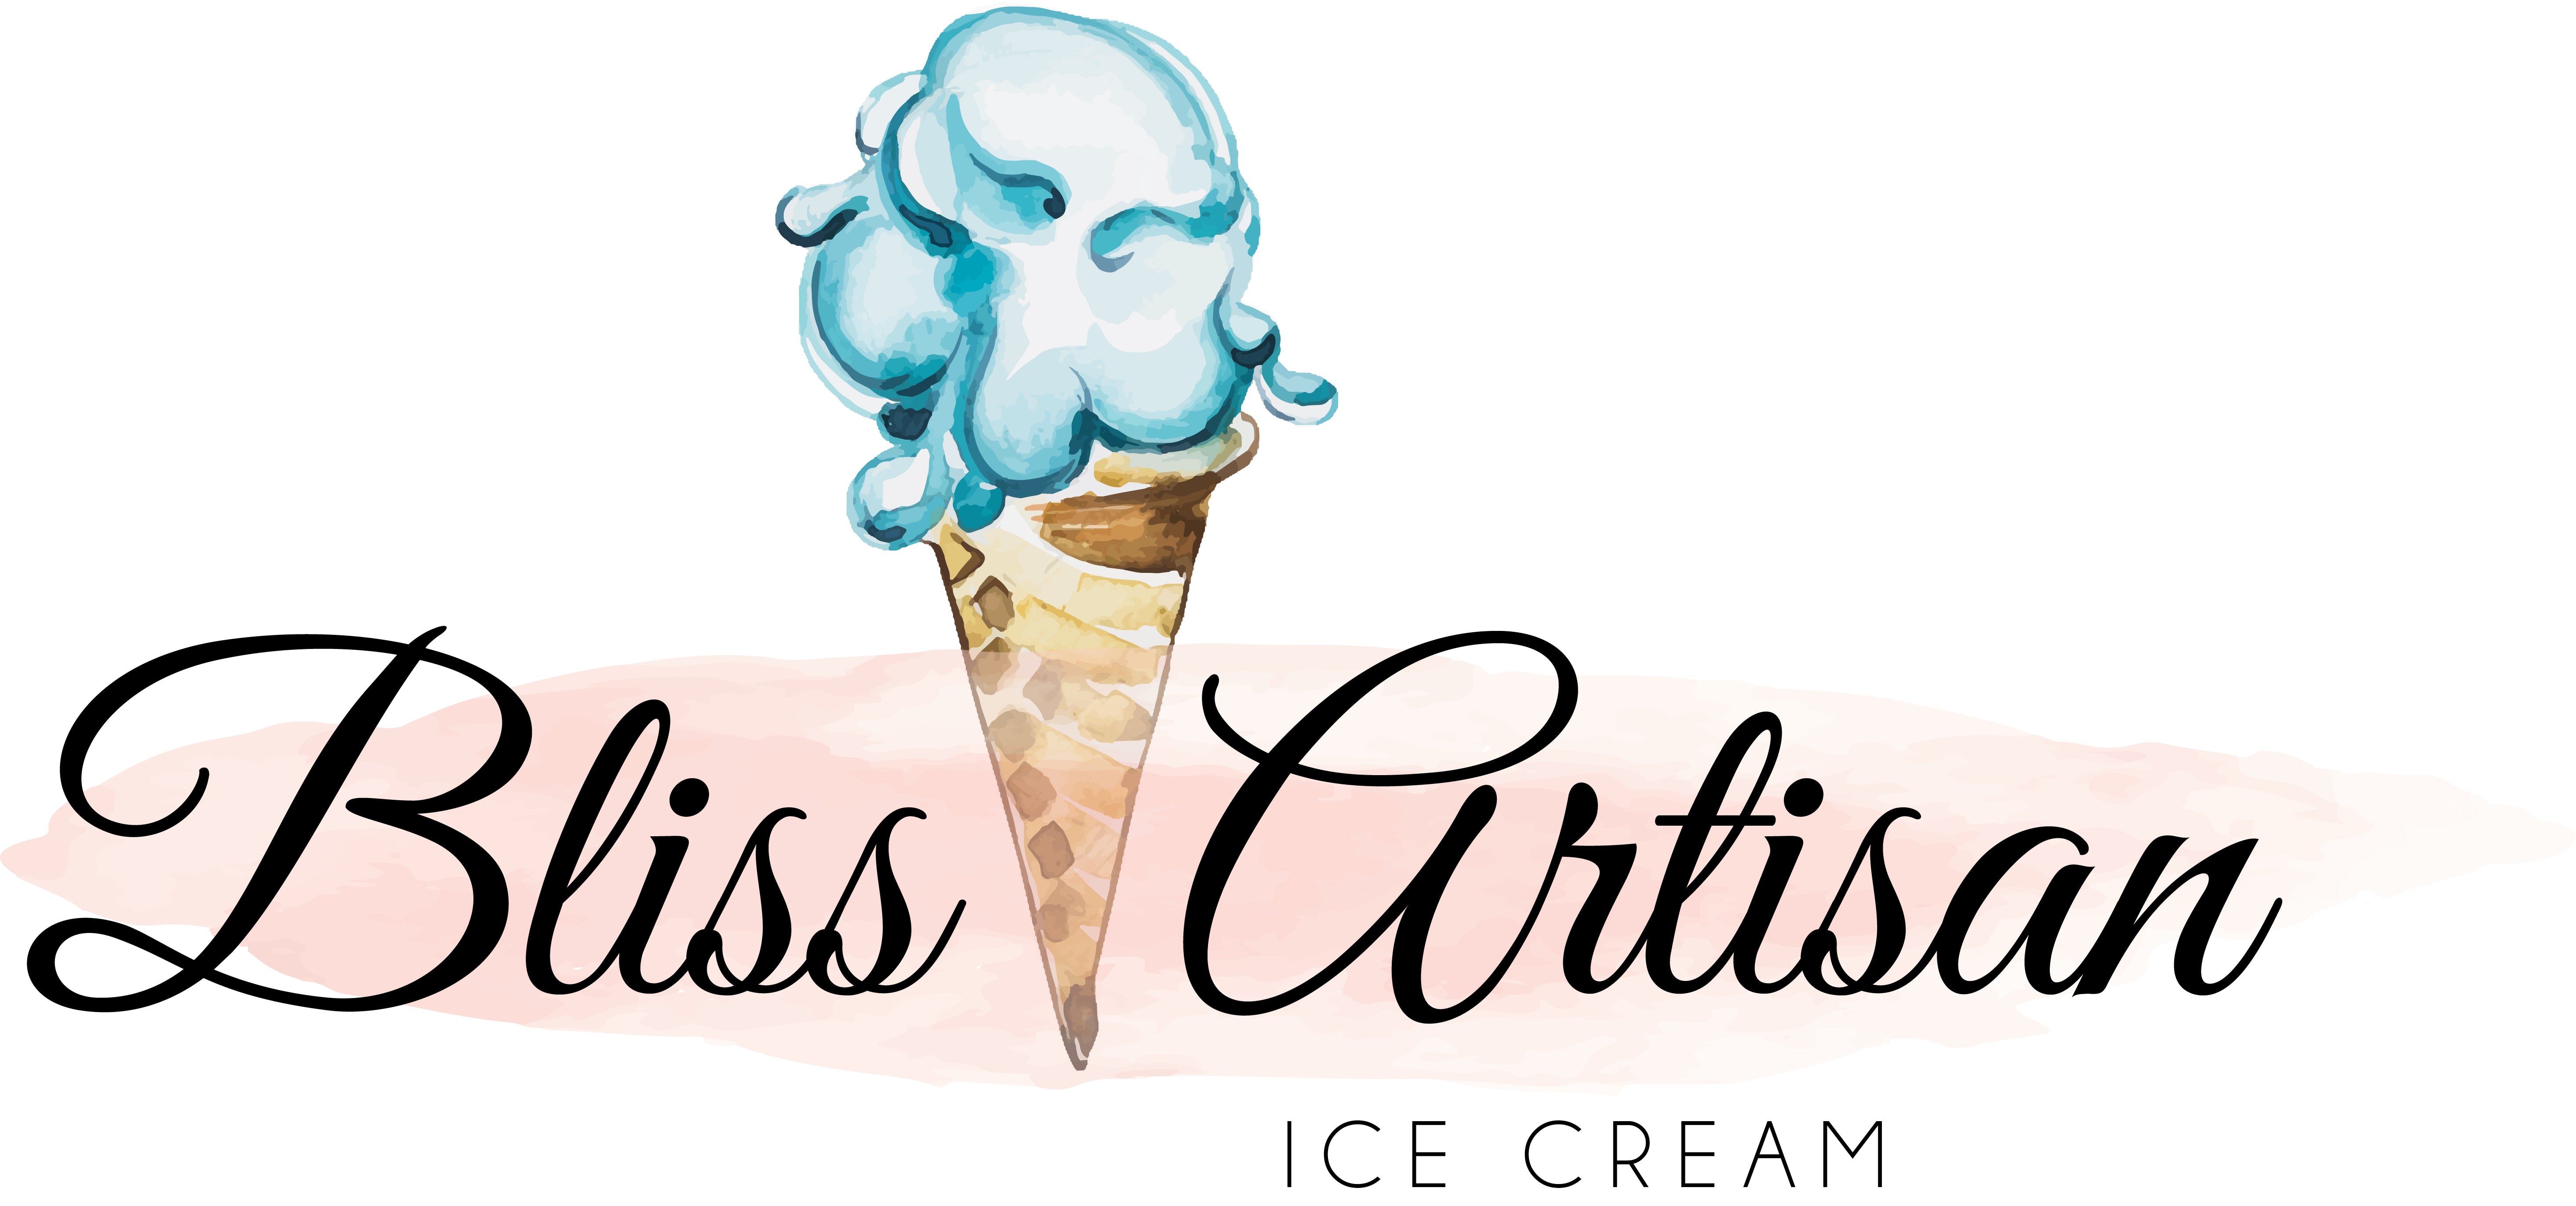 ice cream logo png